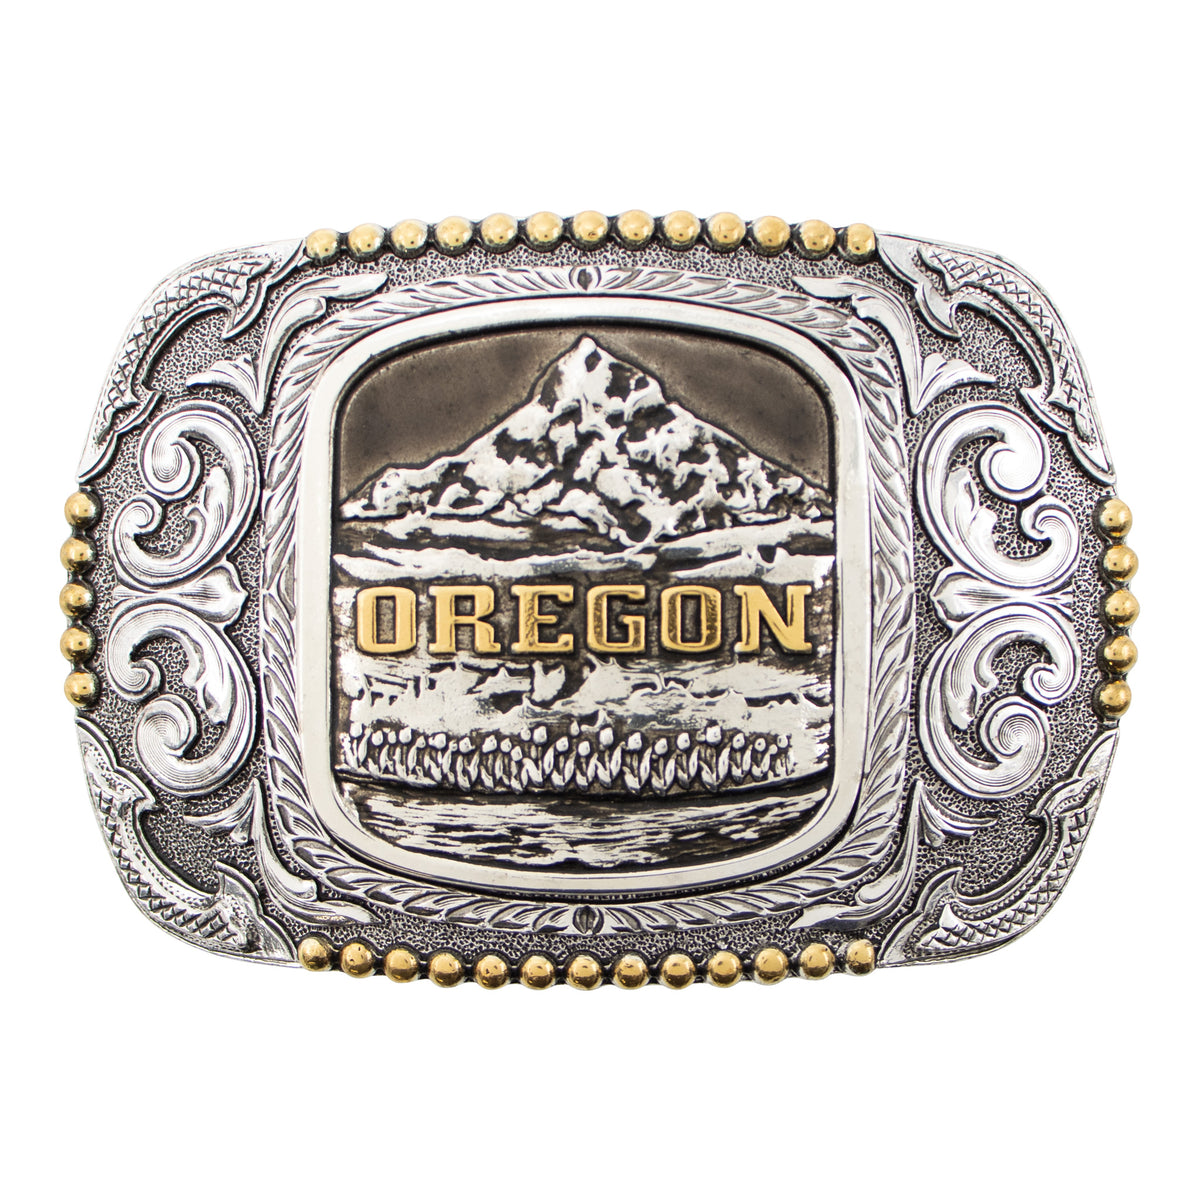 Oregon — Scrolled Rectangle Bead Edge Buckle